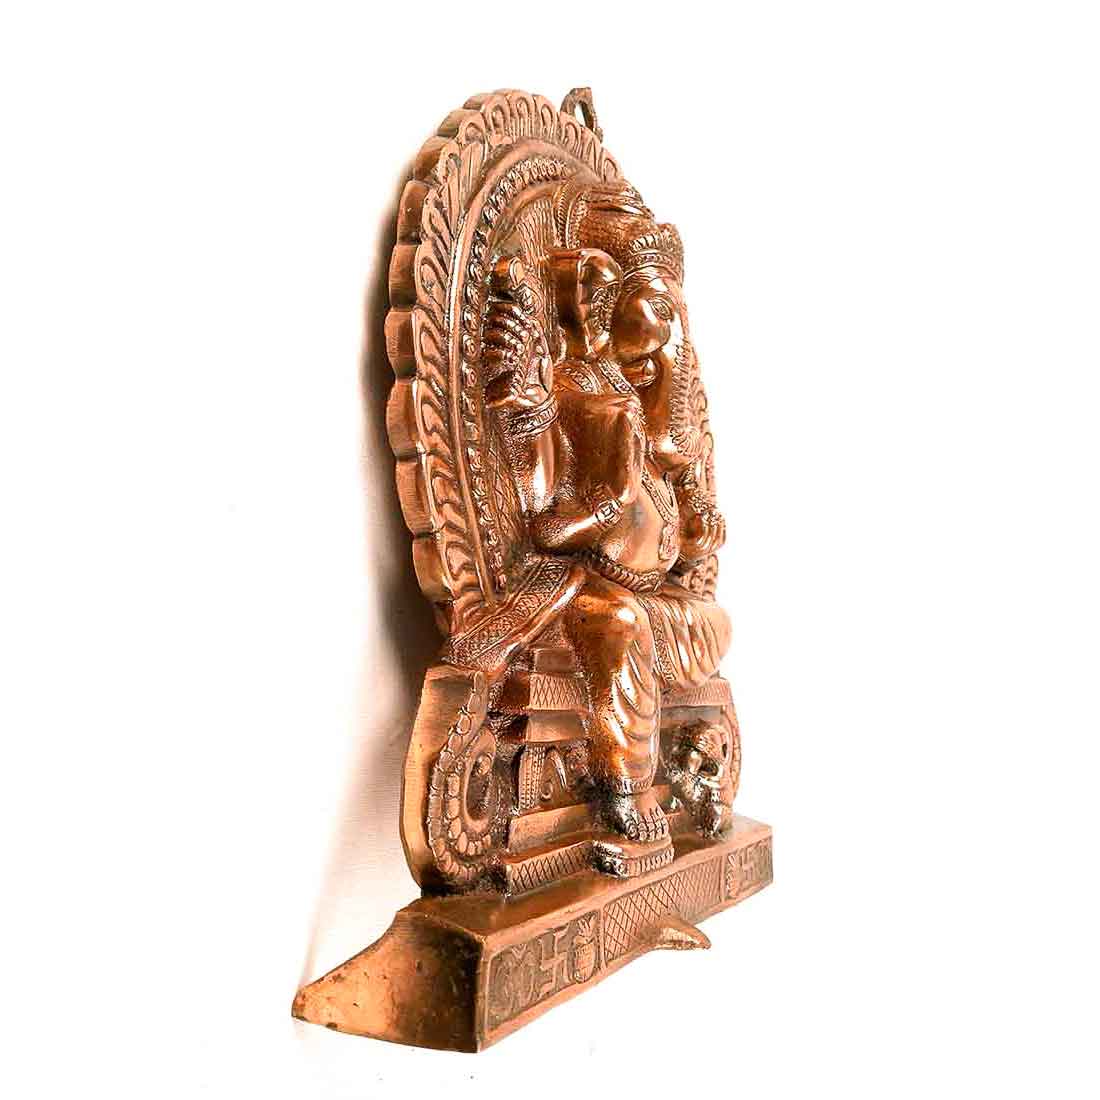 Lord Ganesh Wall Hanging Idol | Ganesha Wall Idol Big Size - for Home, Living Room, Entrance, Main Door | Metal Ganesh Wall Art for Religious & Spiritual Decor | Diwali & Housewarming Gift - 16 Inch